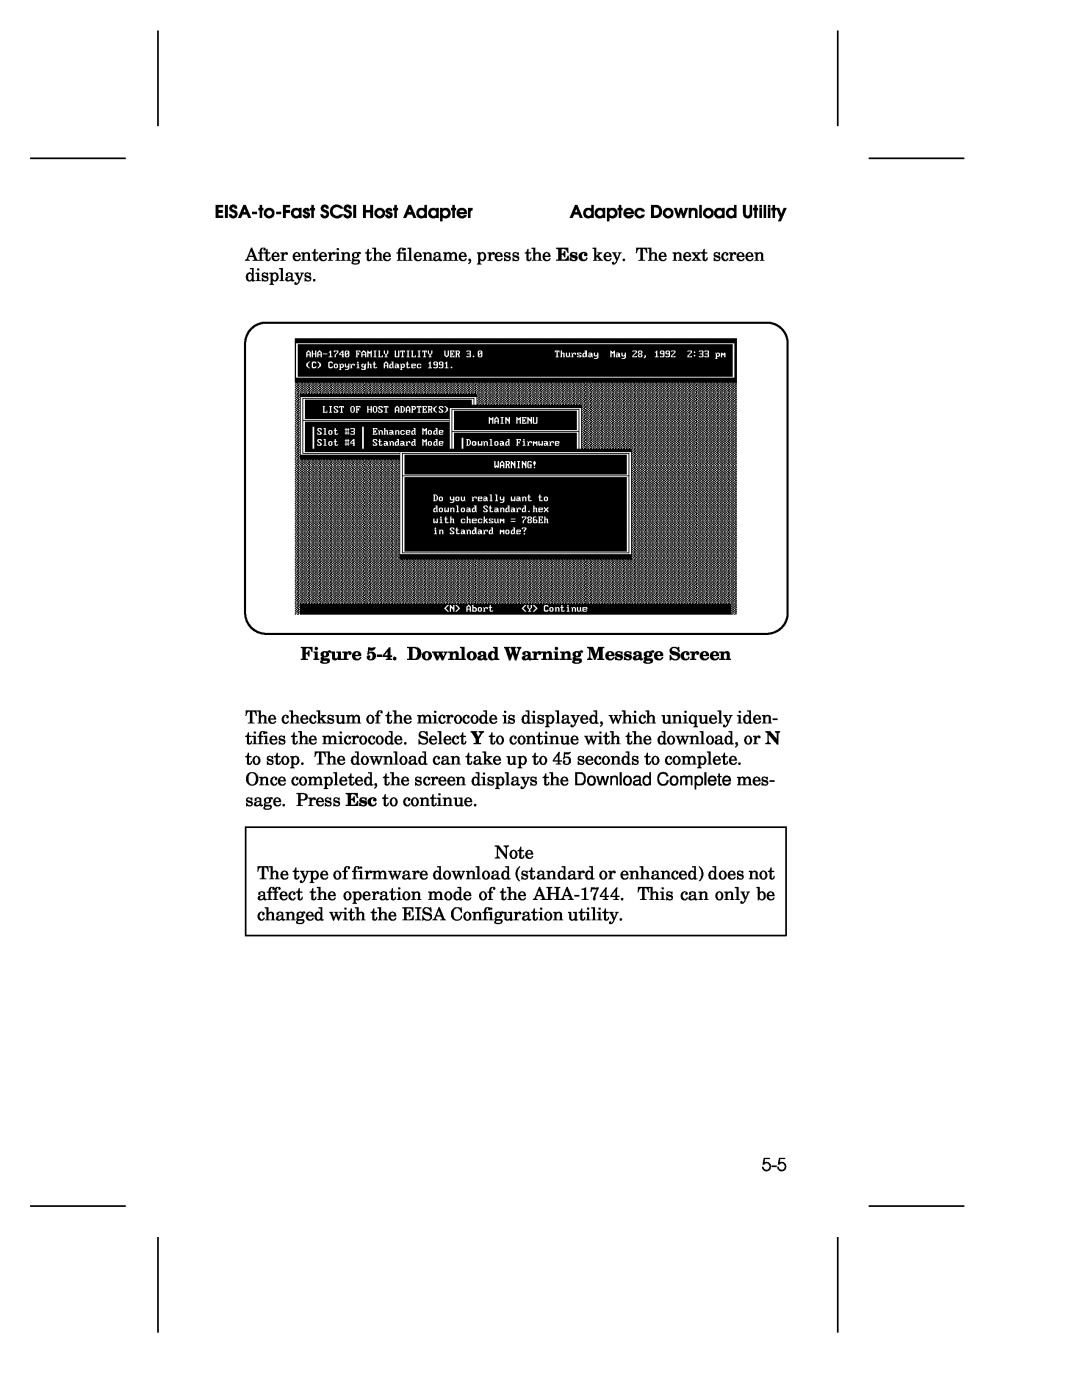 Adaptec 1744, AHA-1740A, 1742A user manual 4. Download Warning Message Screen 